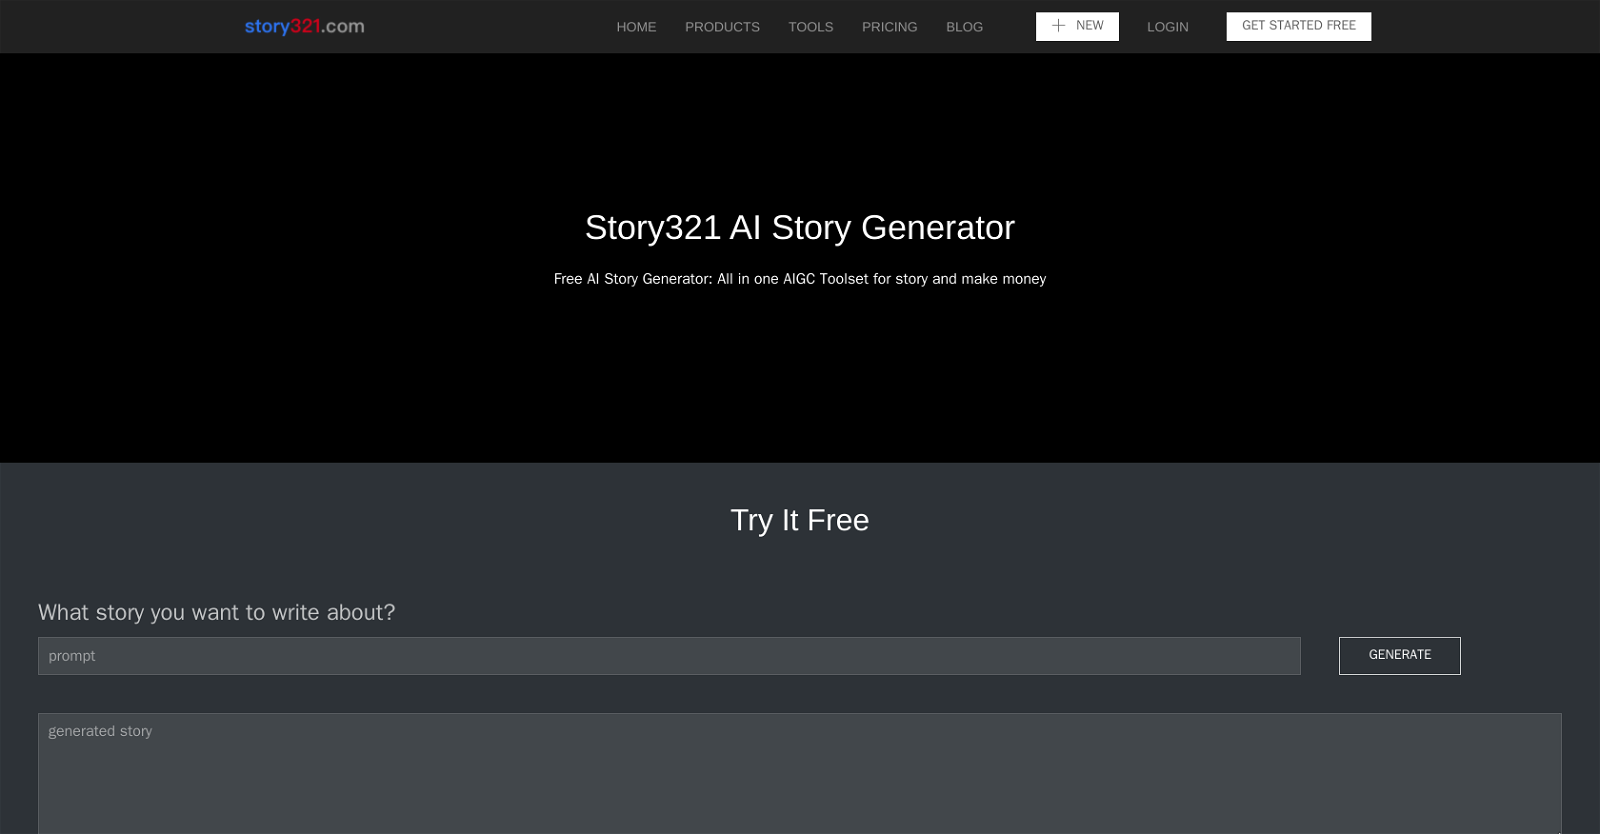 Story321 website